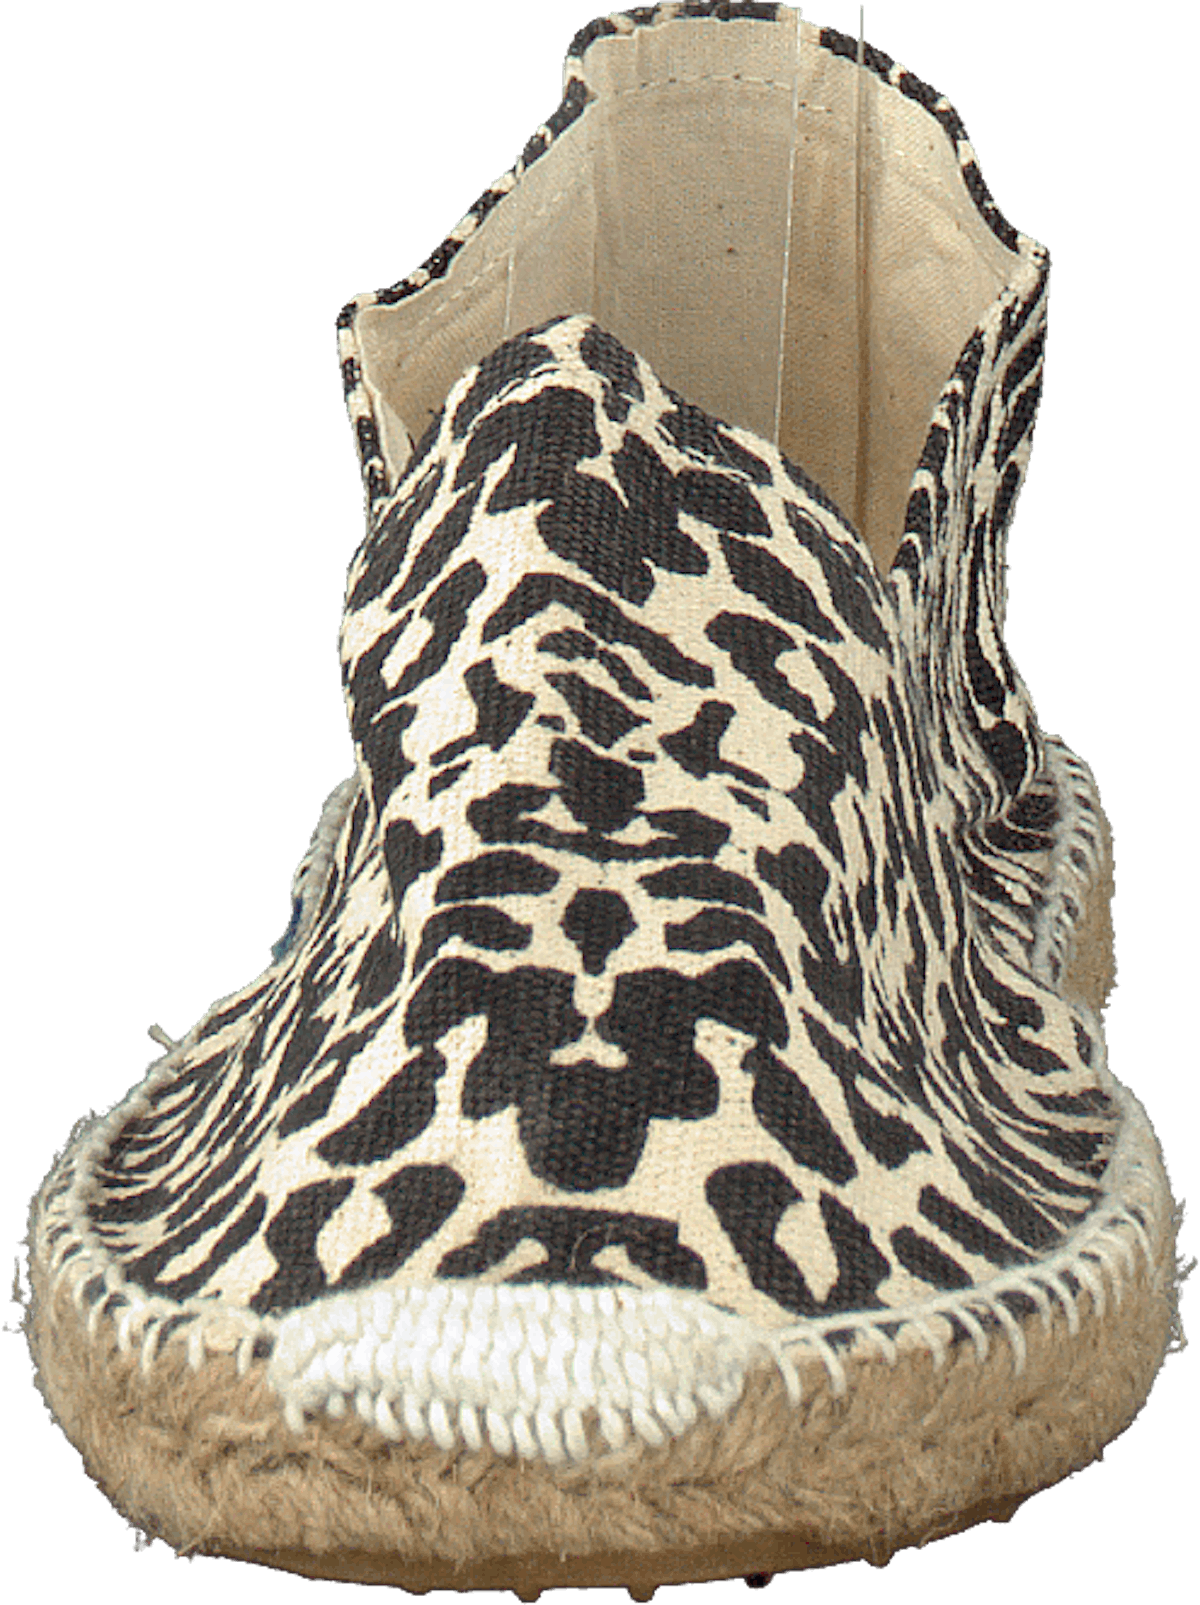 1020-32 Leopard